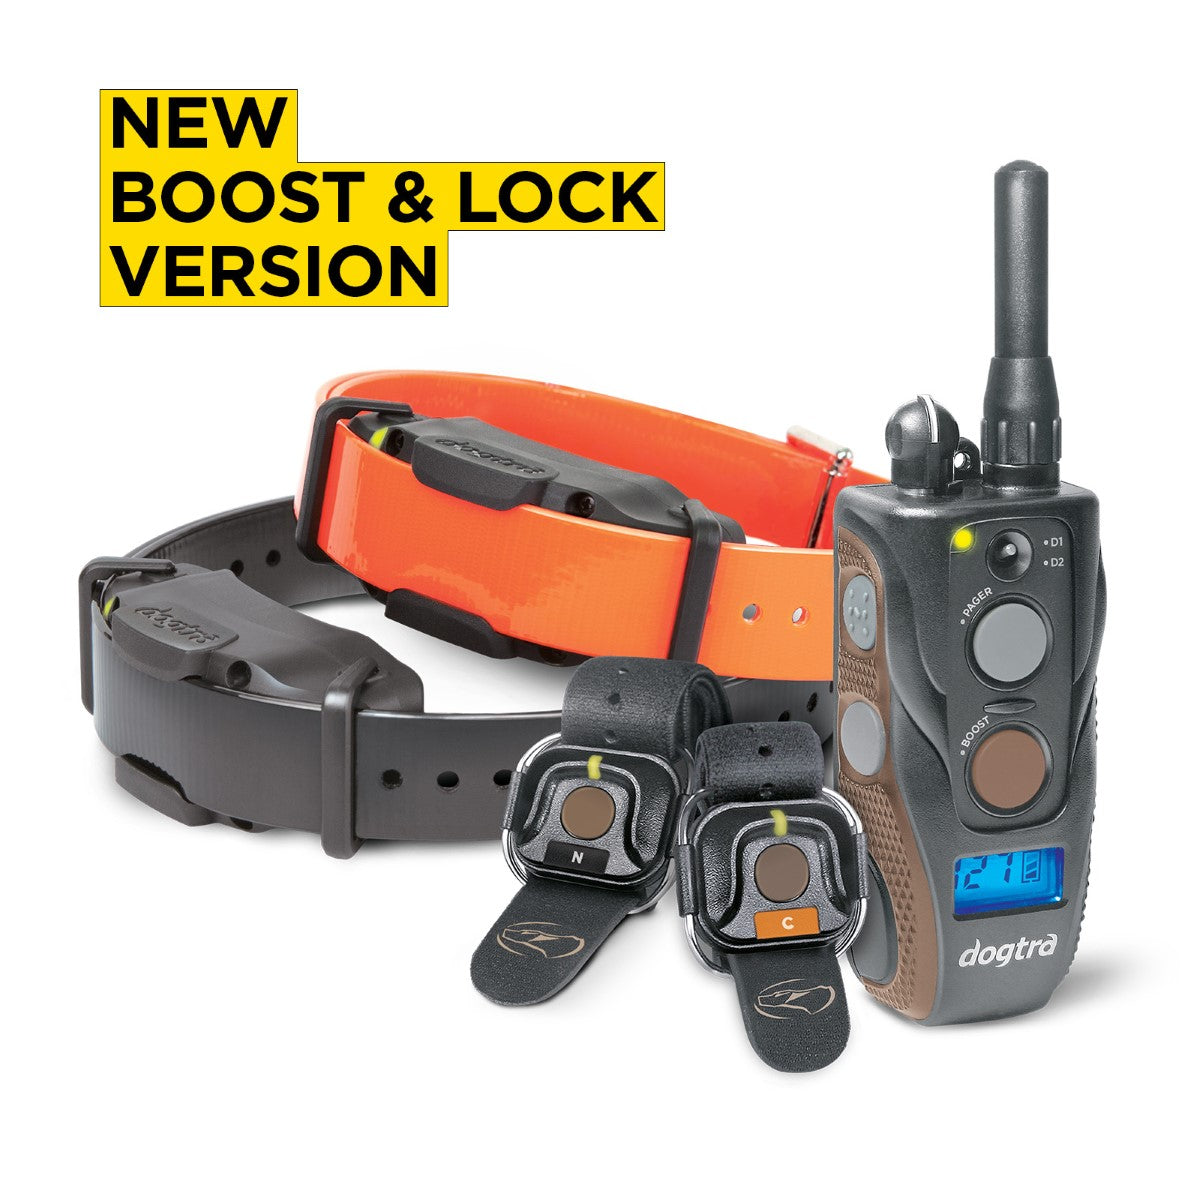 Dogtra 1902S HANDSFREE PLUS Boost and Lock, Remote Dog Training E-Collar 3/4 Mile Range